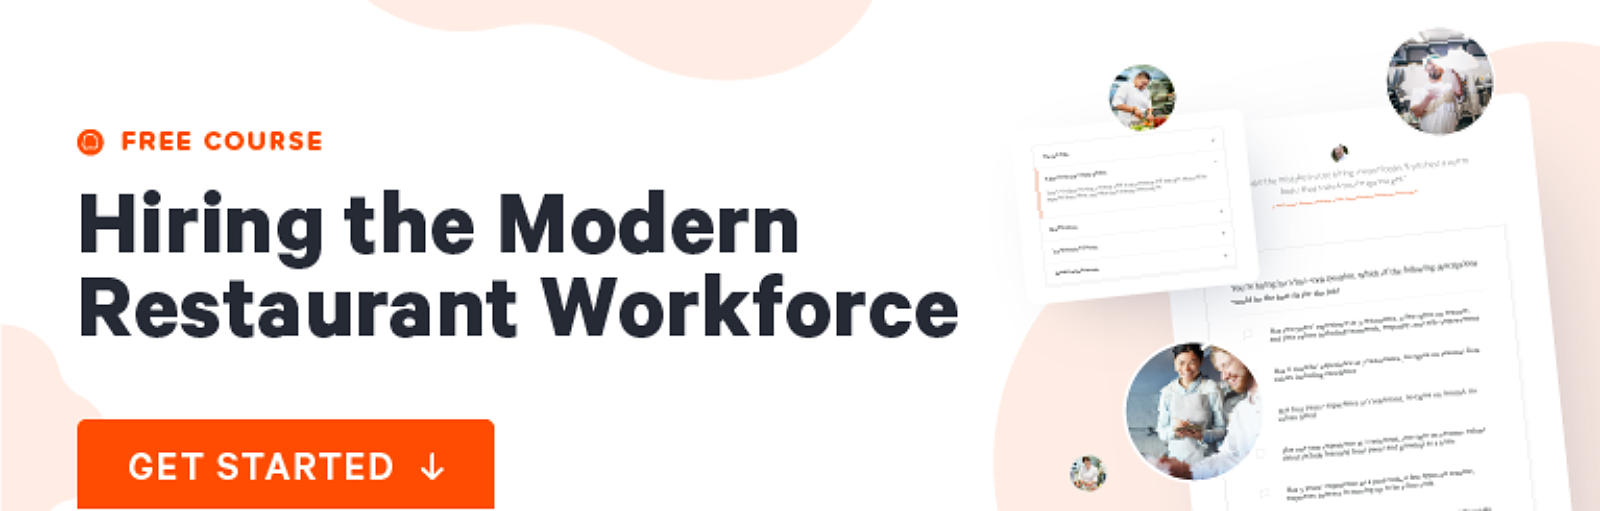 Modern-workforce-course_blog-form-cta-1